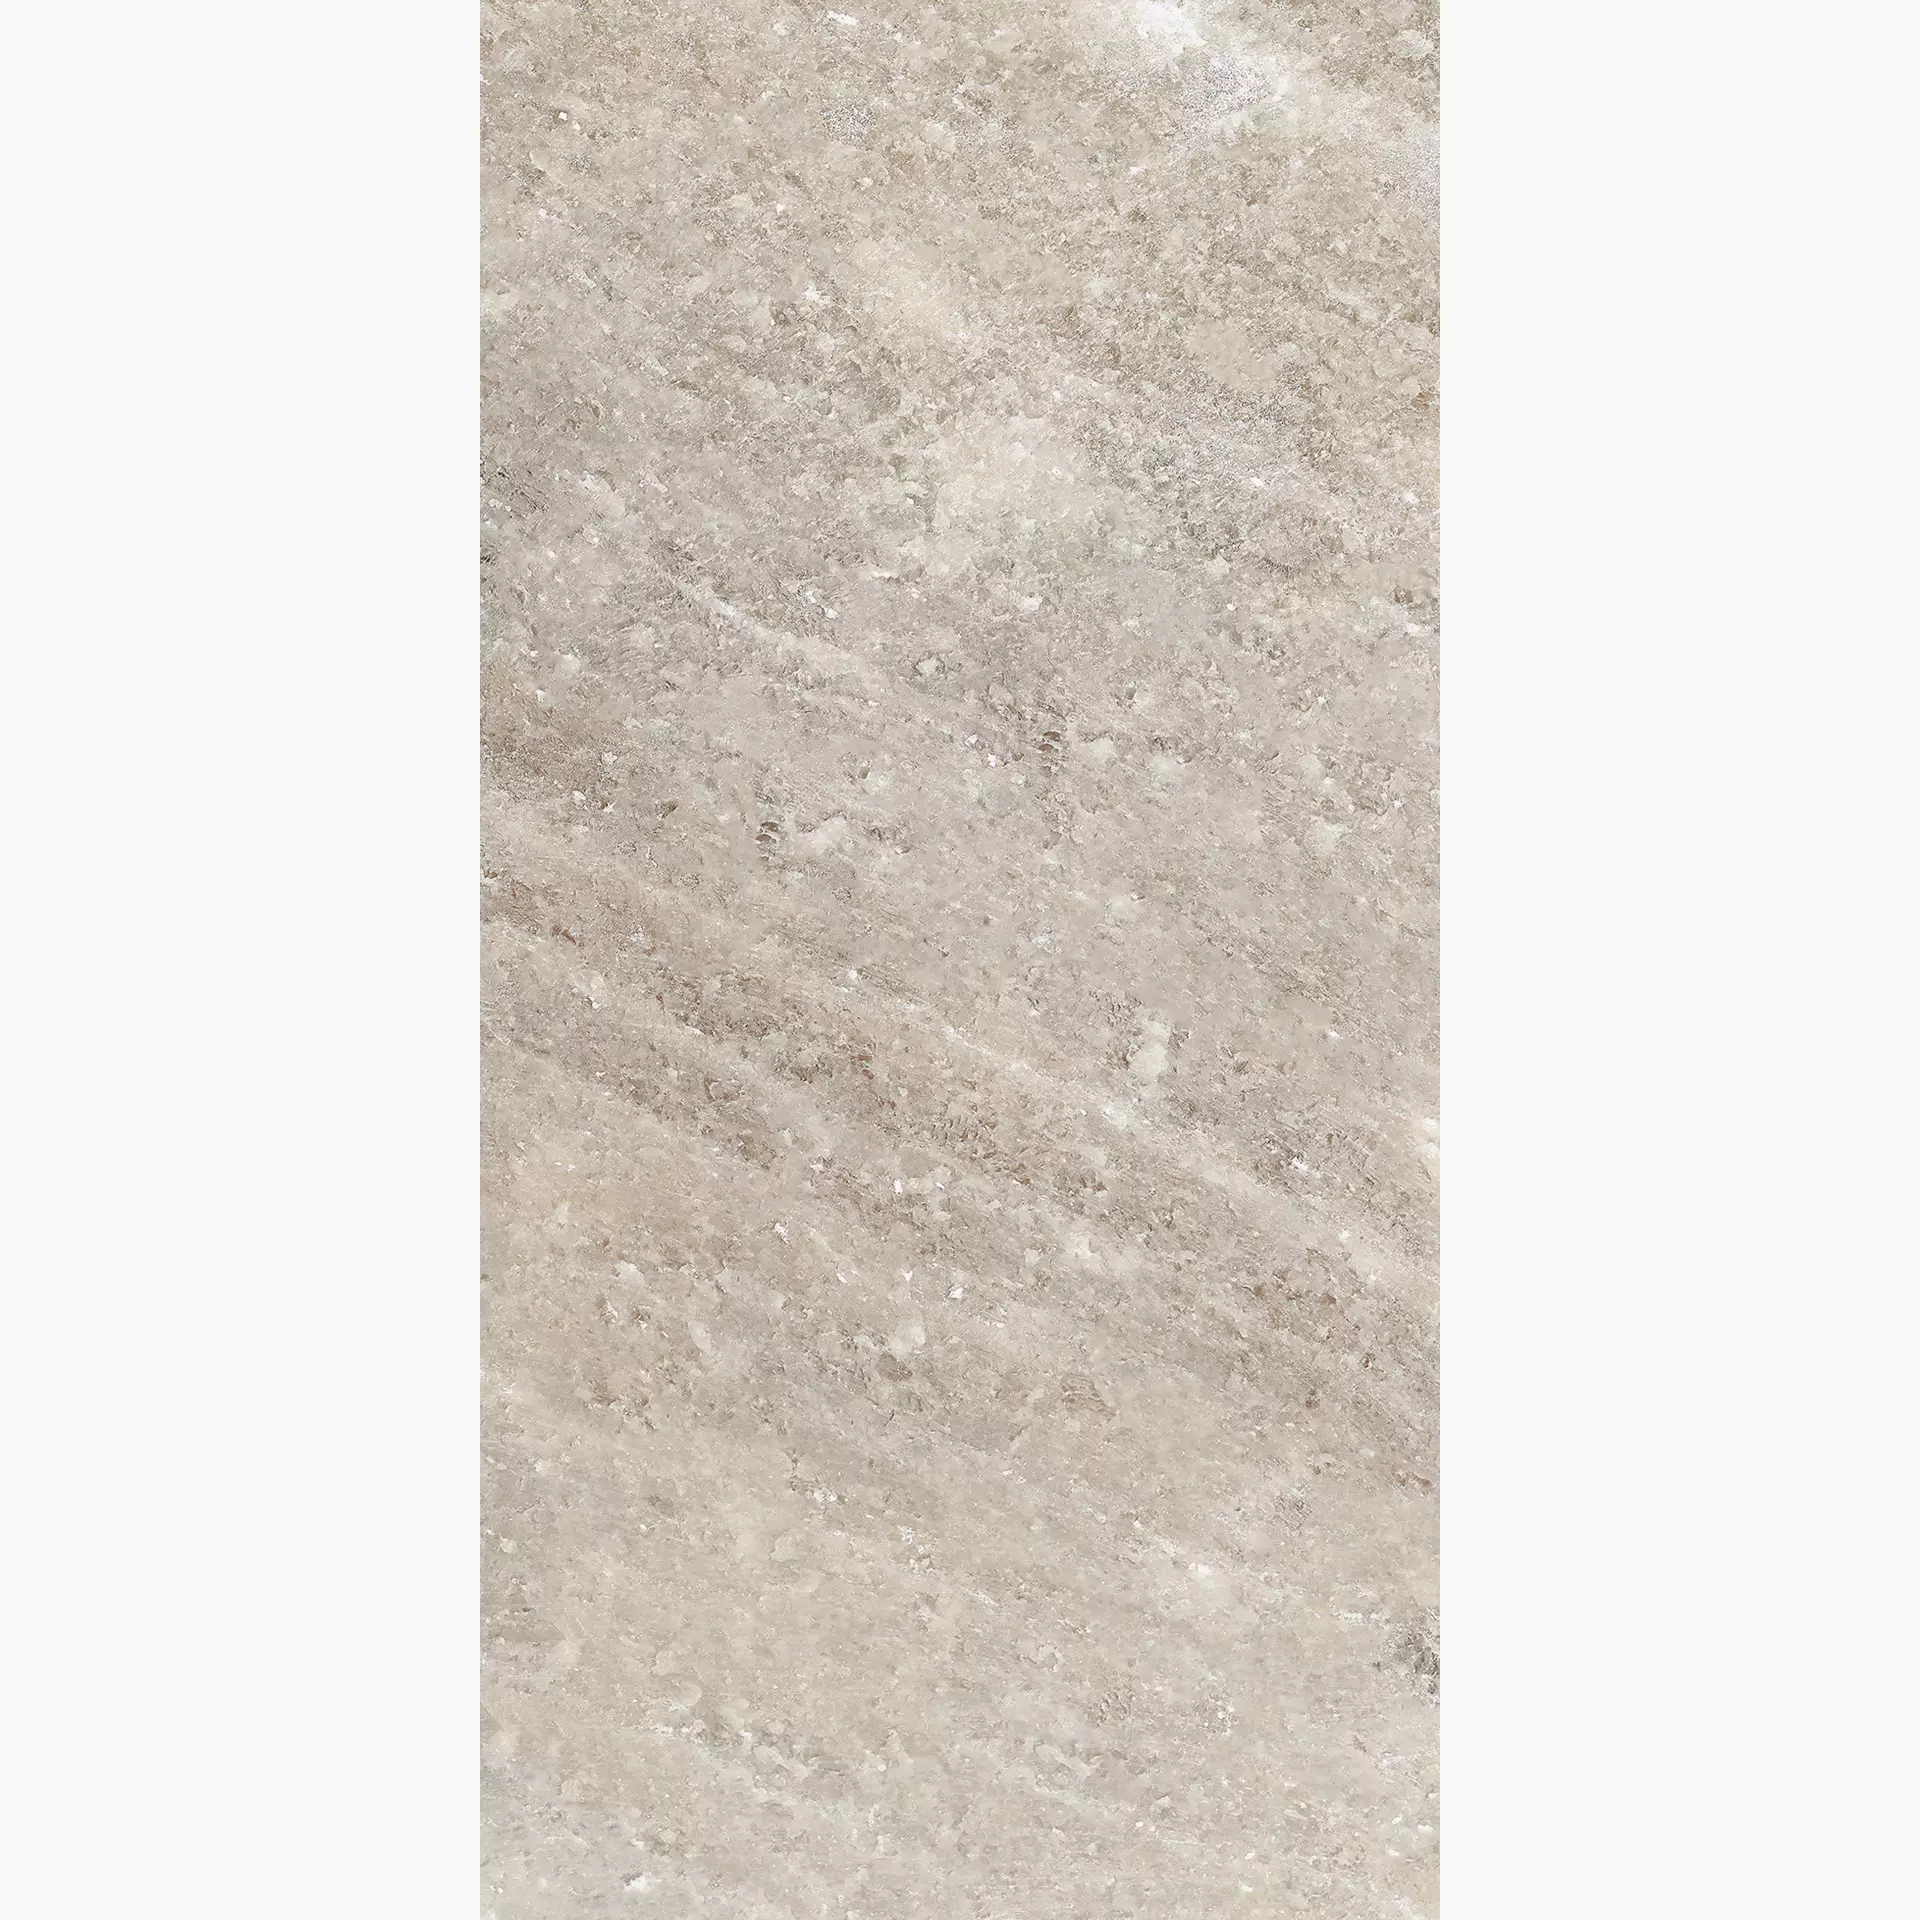 Florim Rock Salt Danish Smoke Naturale – Matt 765910 30x60cm rectified 9mm